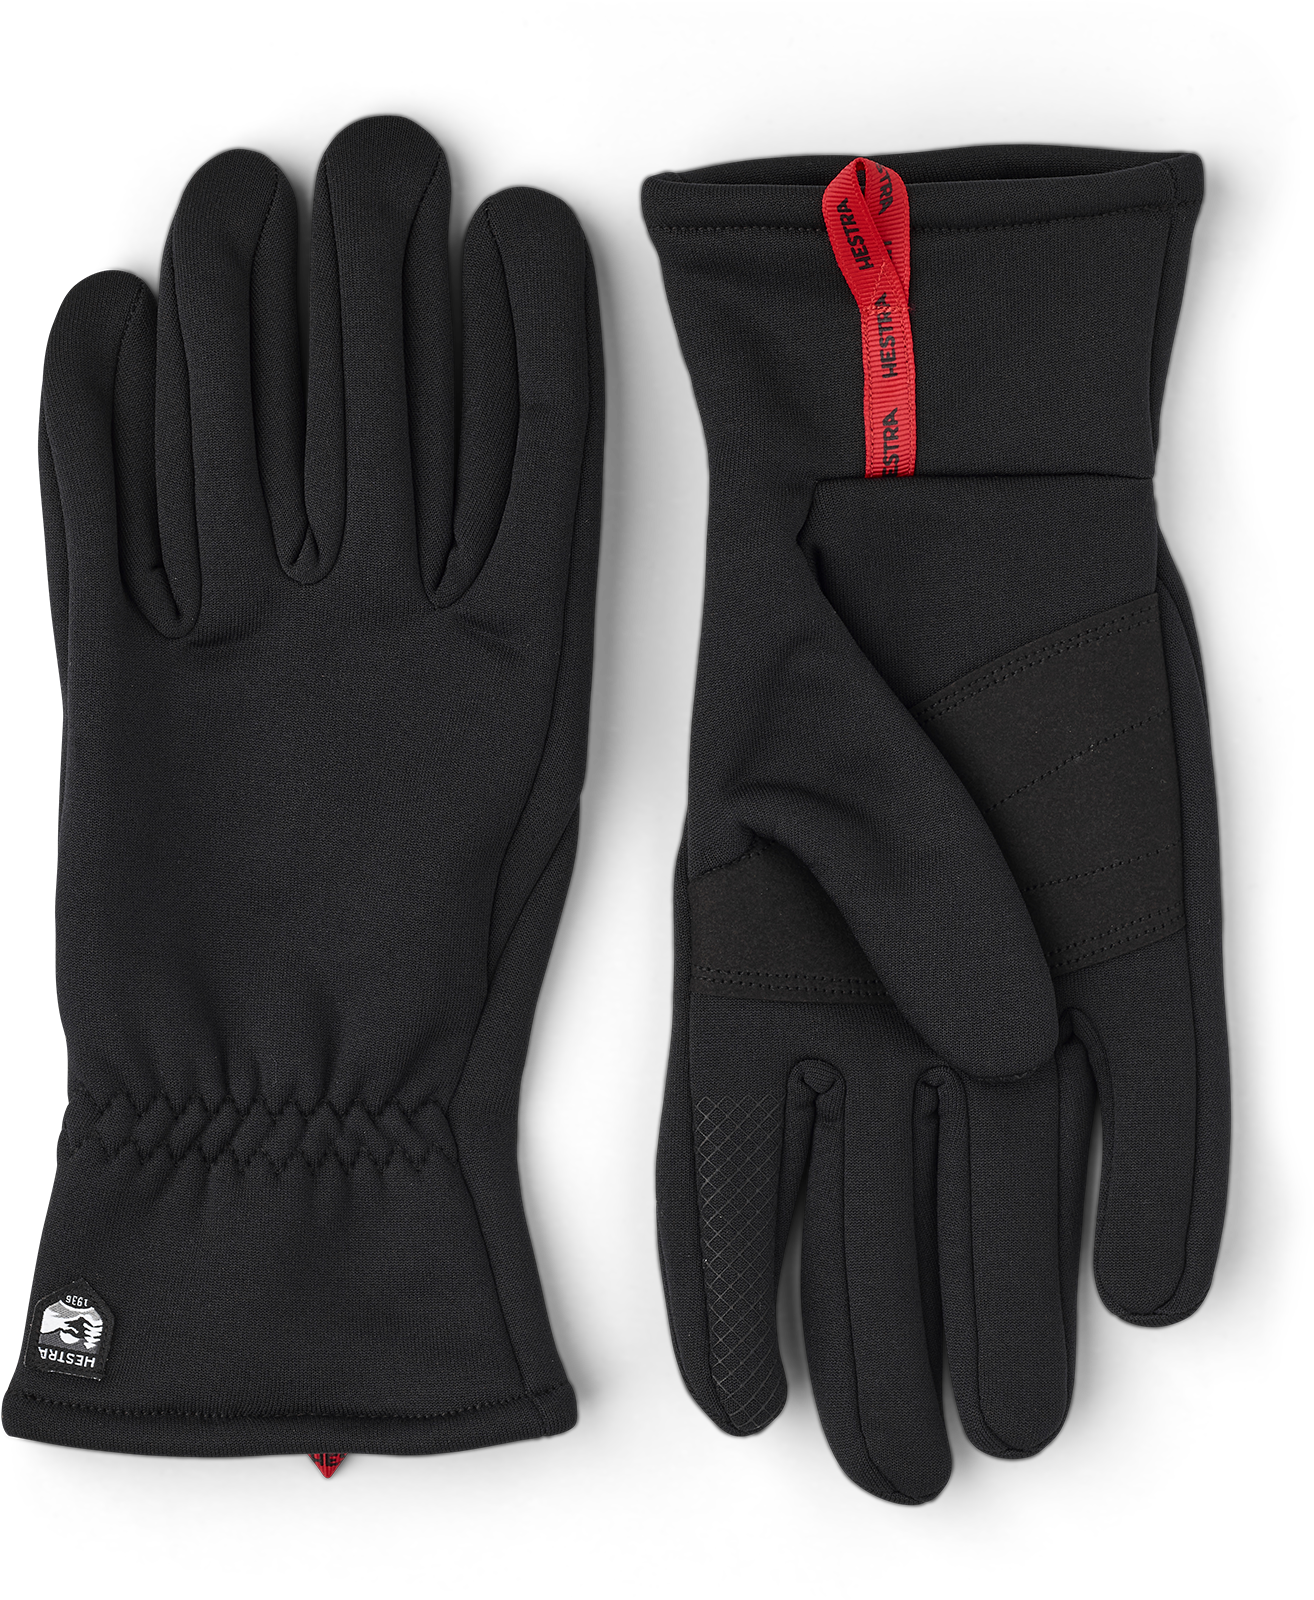 Outdoor gloves & Hiking gloves for men